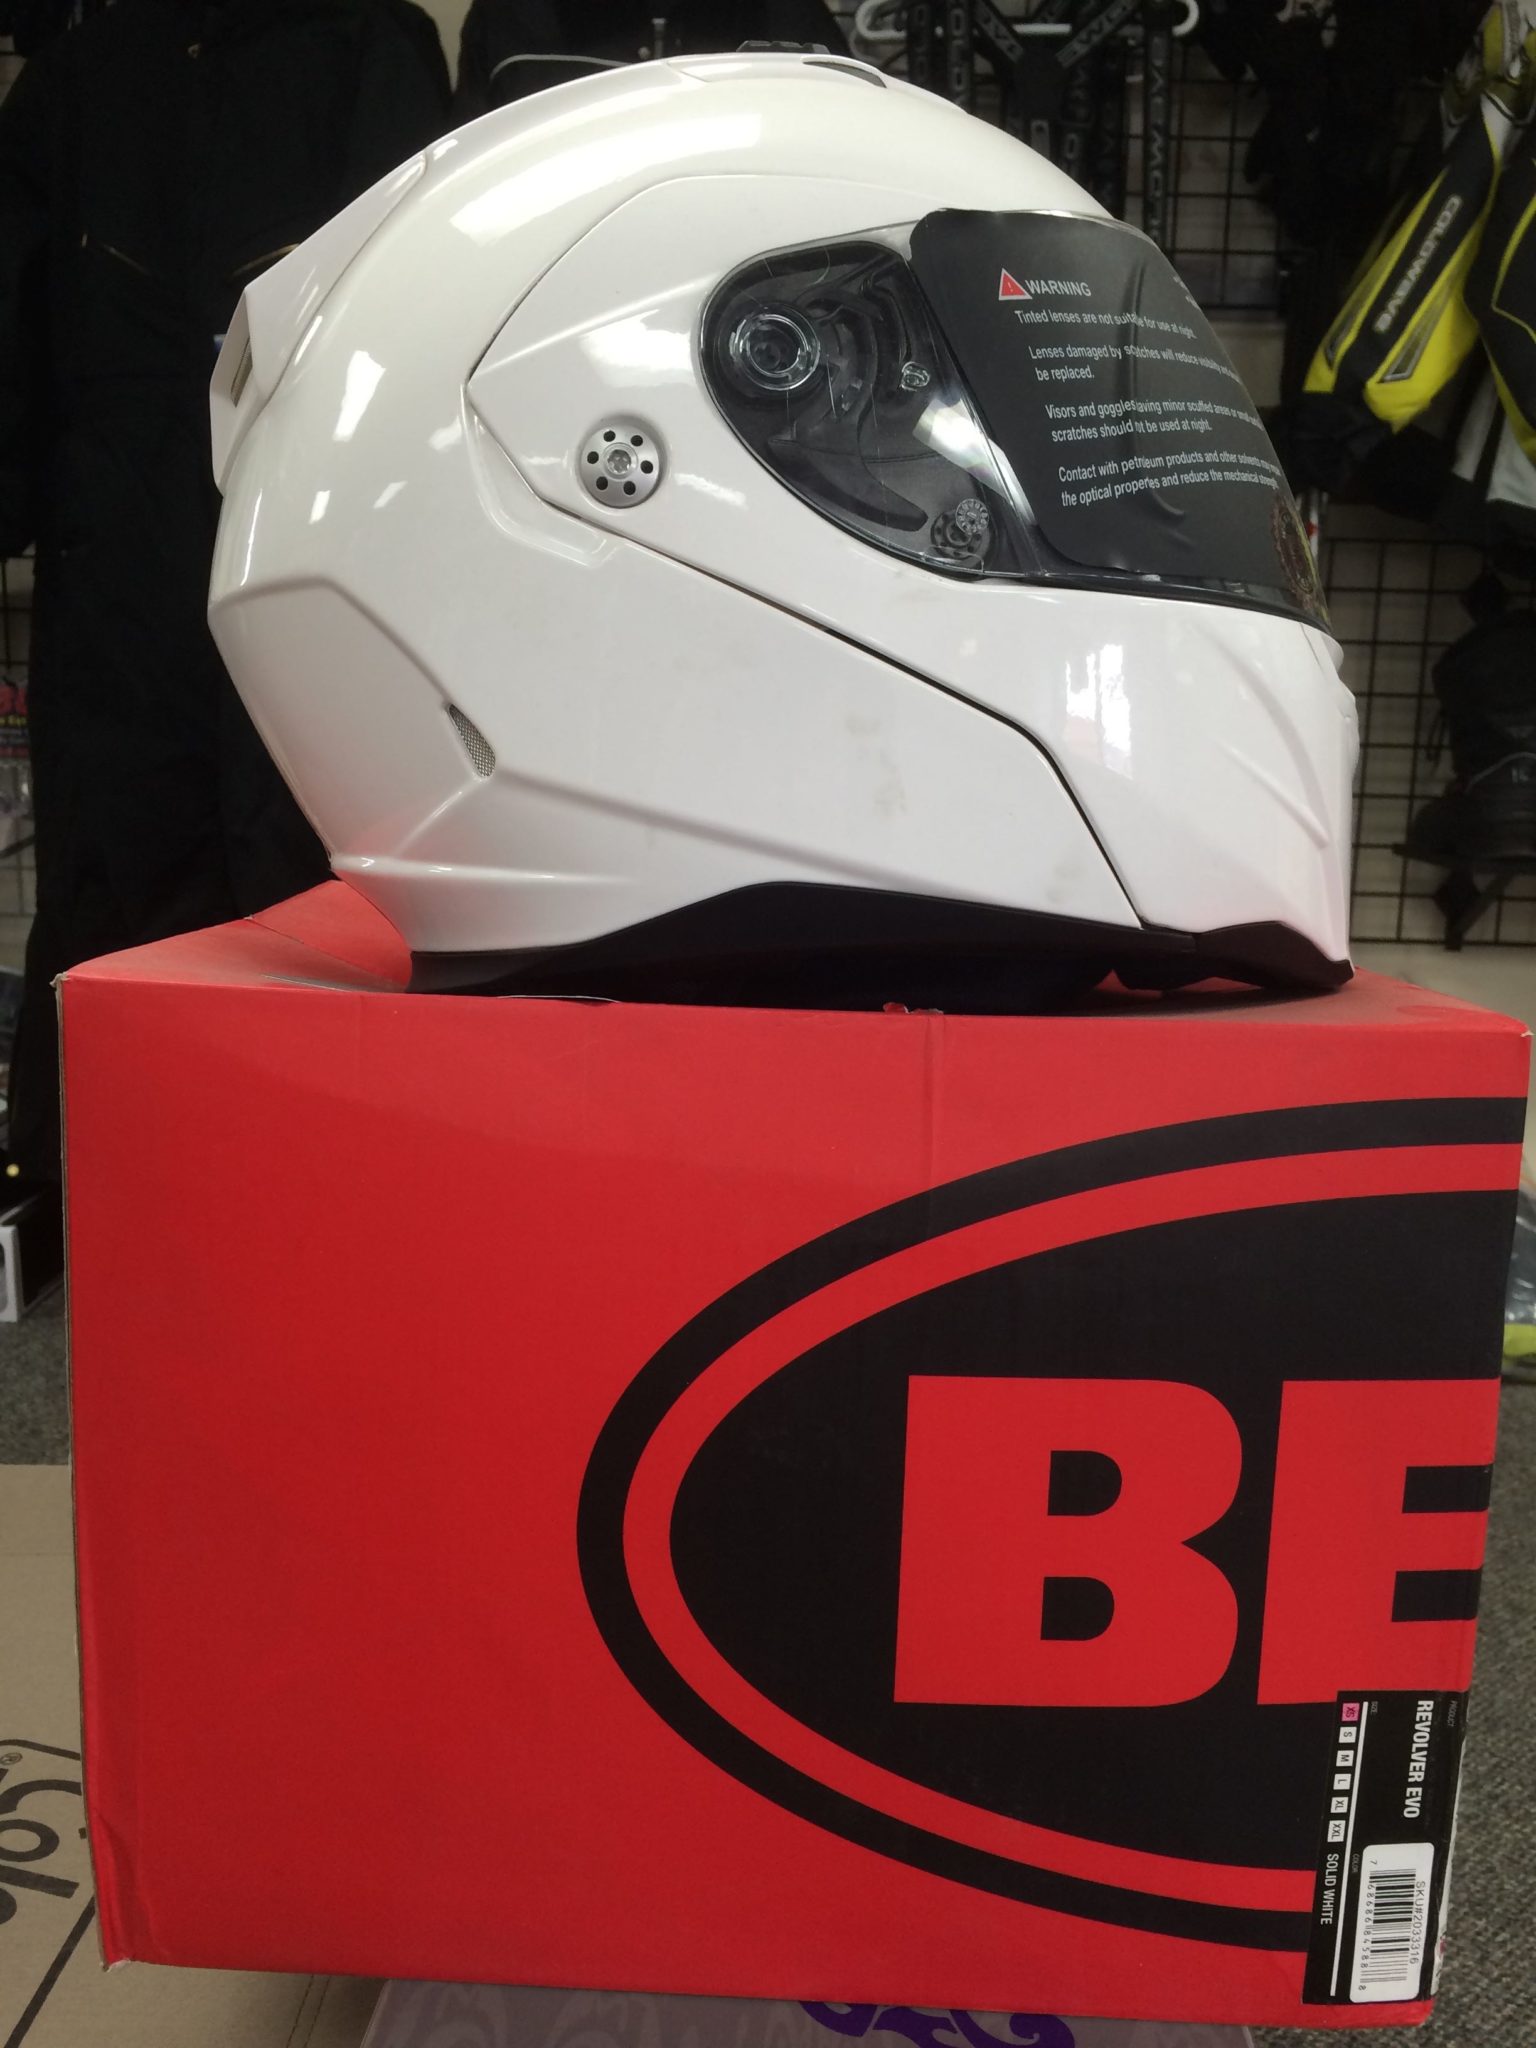 Bell Helmets for Sale | Big Boys Toys | Bozeman, MT